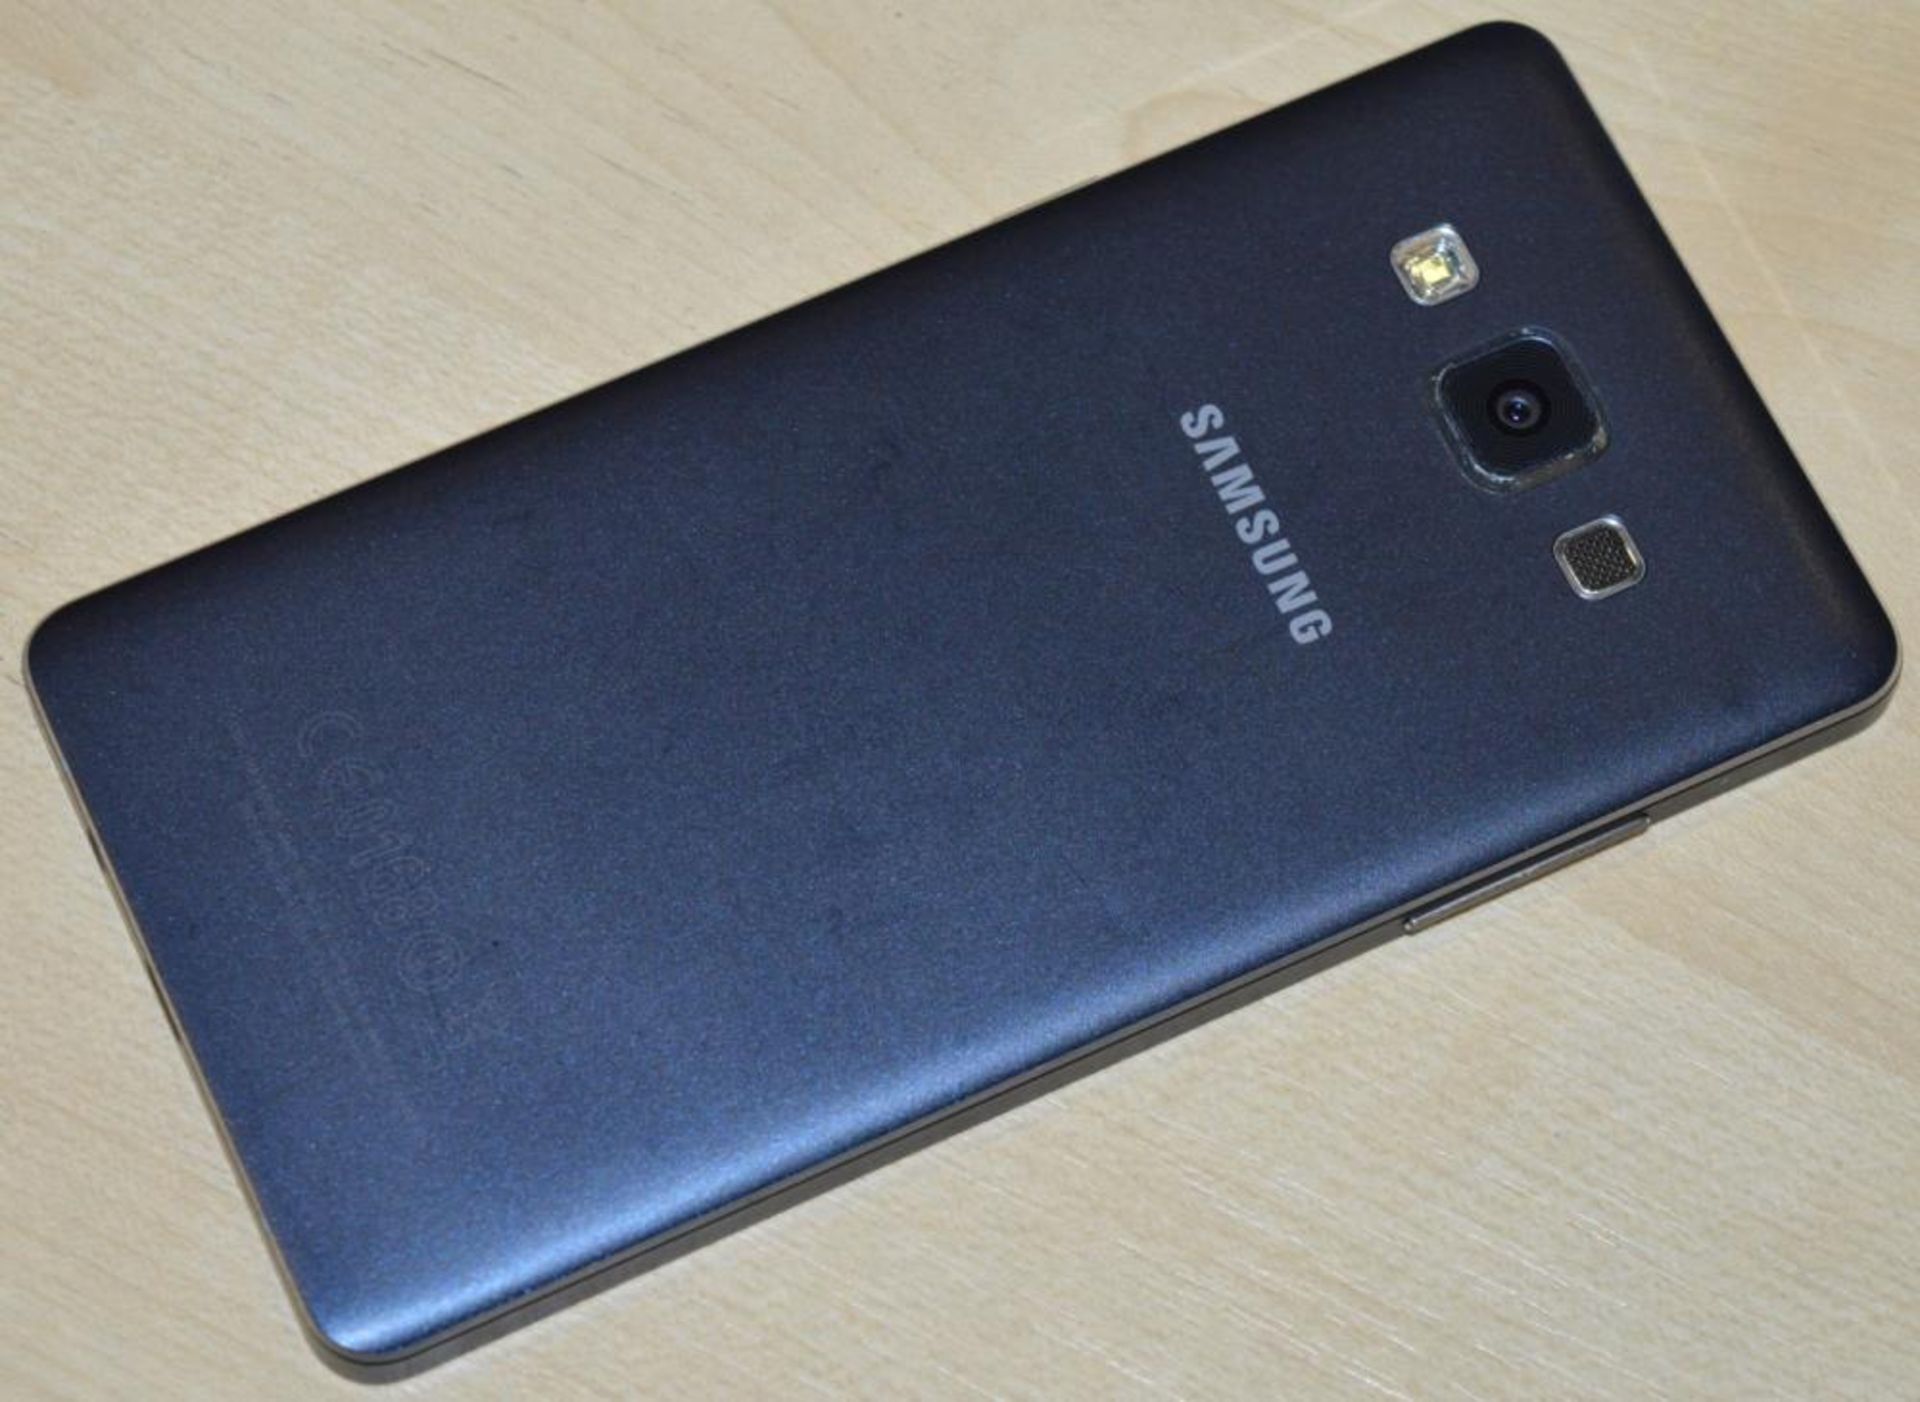 1 x Samsung Galaxy A5 16gb Smart Phone - Model SM-A500FU - Midnight Black - CL285 - Ref J0000 - Loca - Image 2 of 2